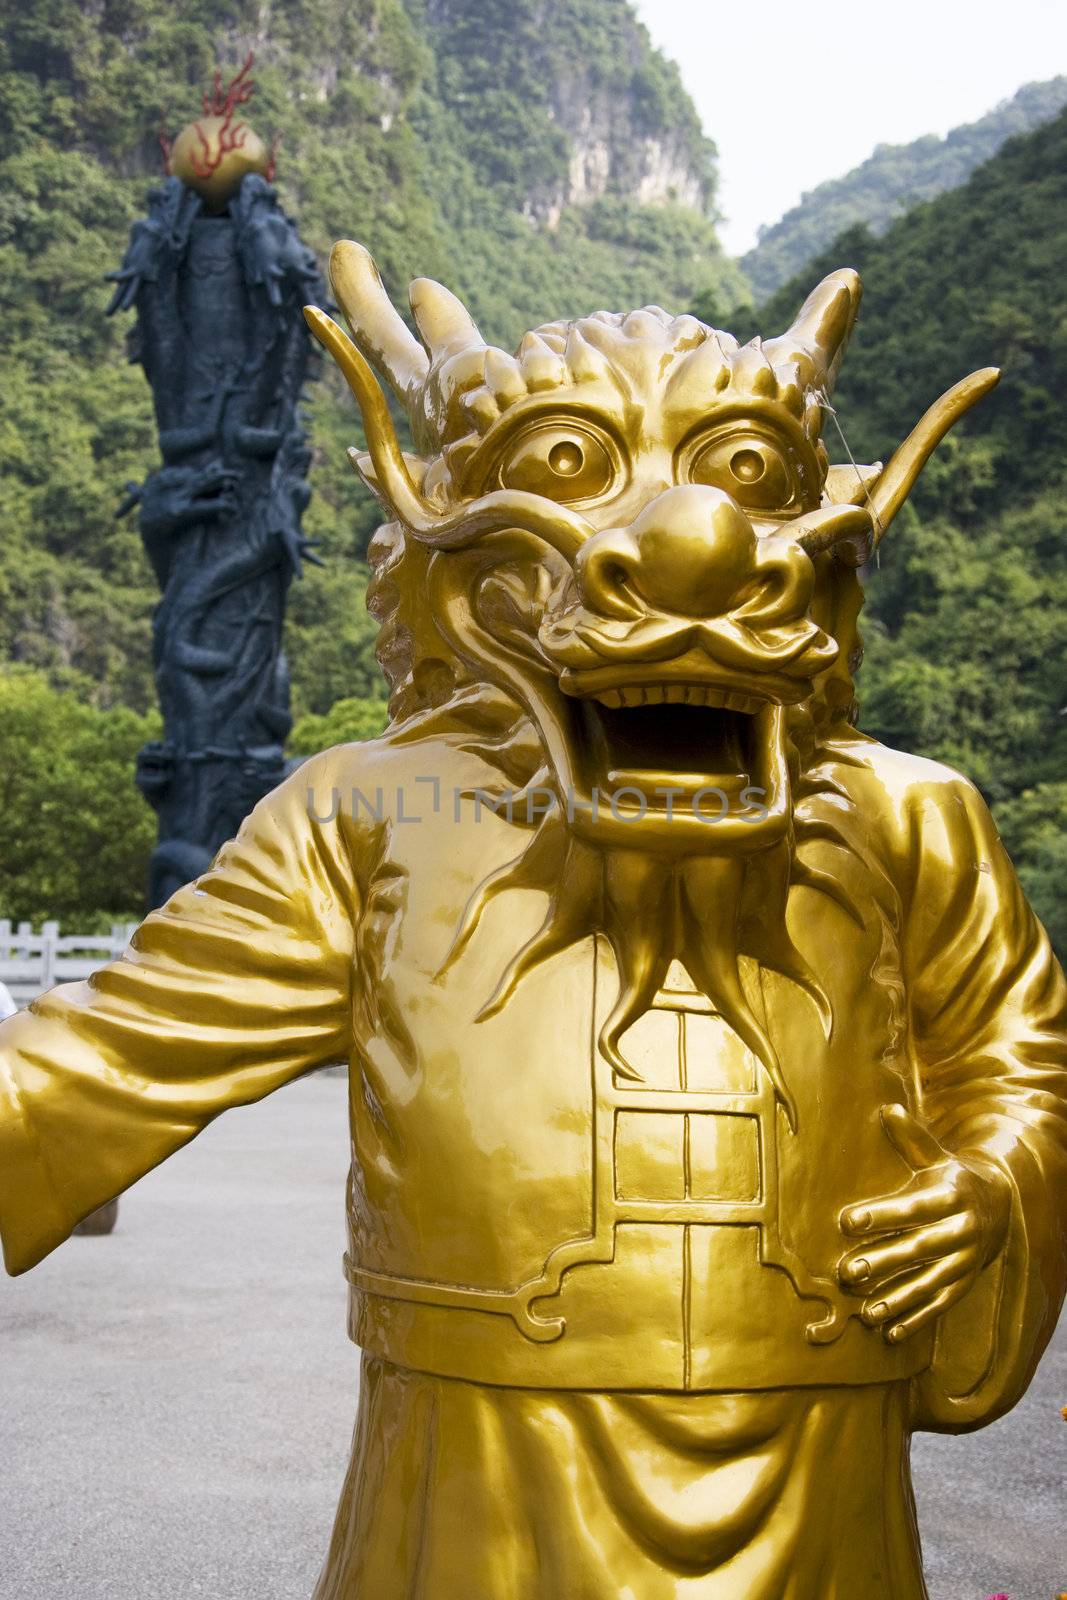 Image of a dragon guardian at the Assembly Dragon Cave entrance, Yangshuo, Guilin, China.